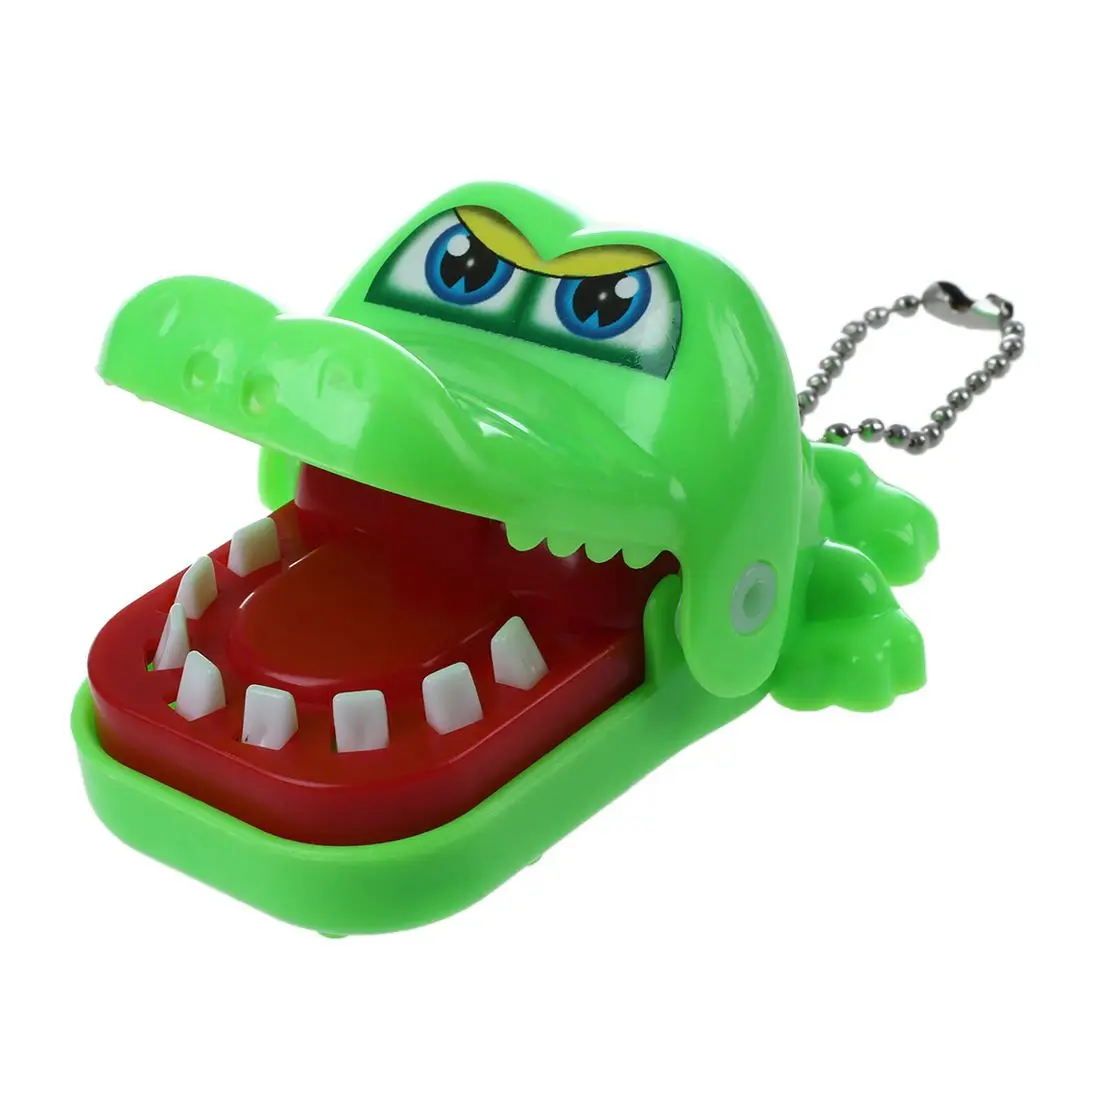 

New Toy Crocodile Dentist Bite With Keychain Green